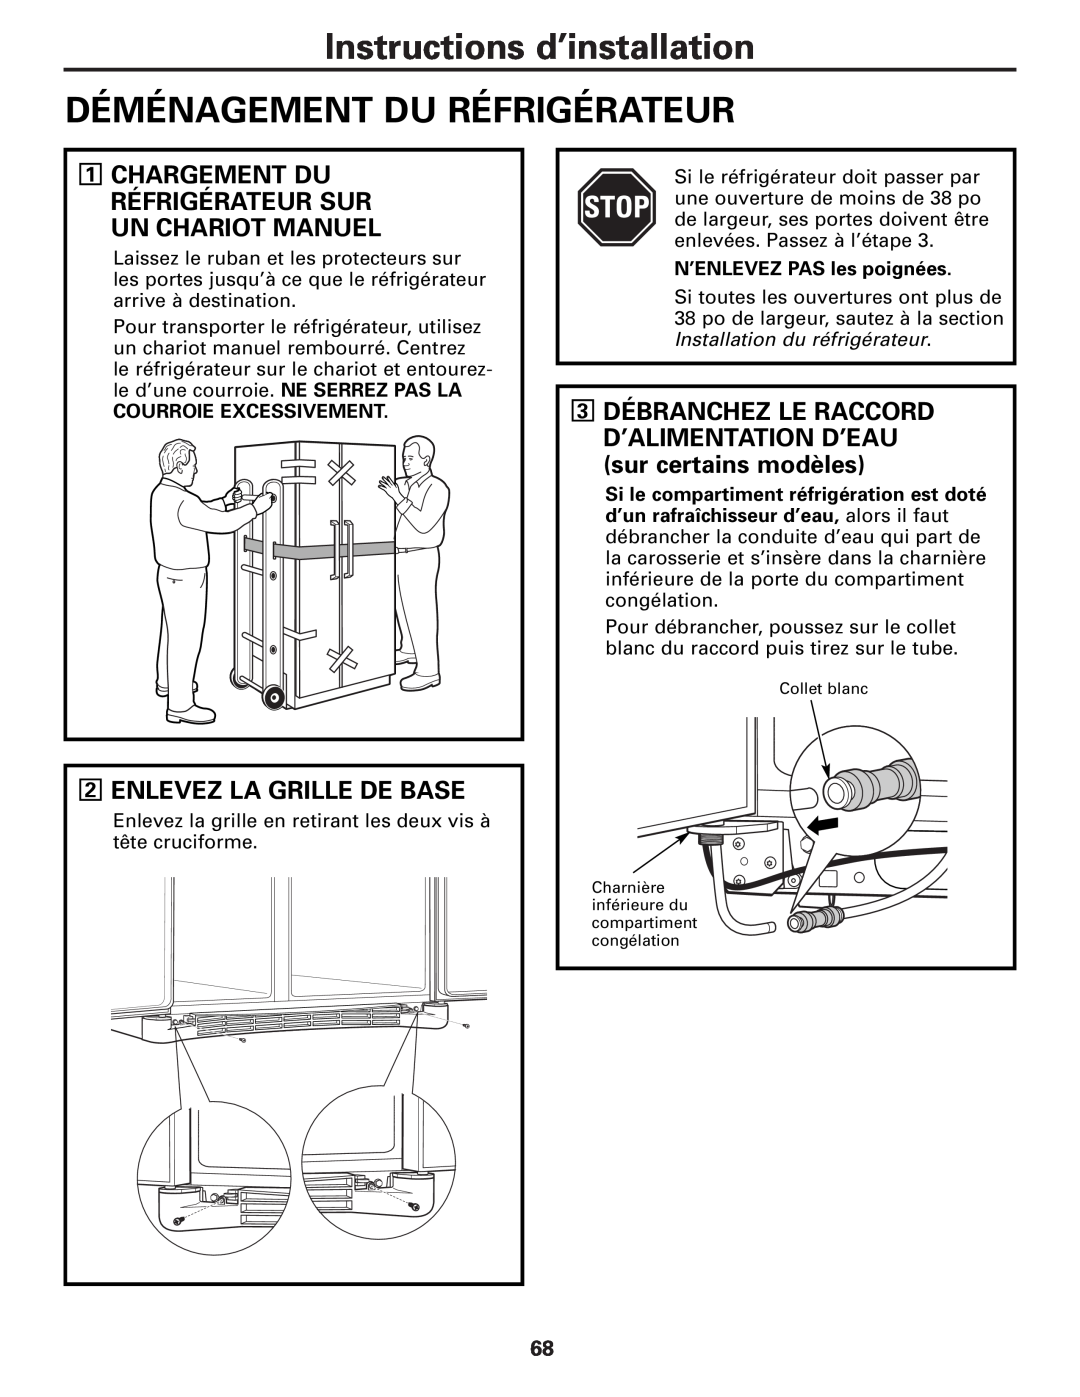 GE 49-60456 Instructions d’installation, Déménagement Du Réfrigérateur, Chargement Du Réfrigérateur Sur Un Chariot Manuel 